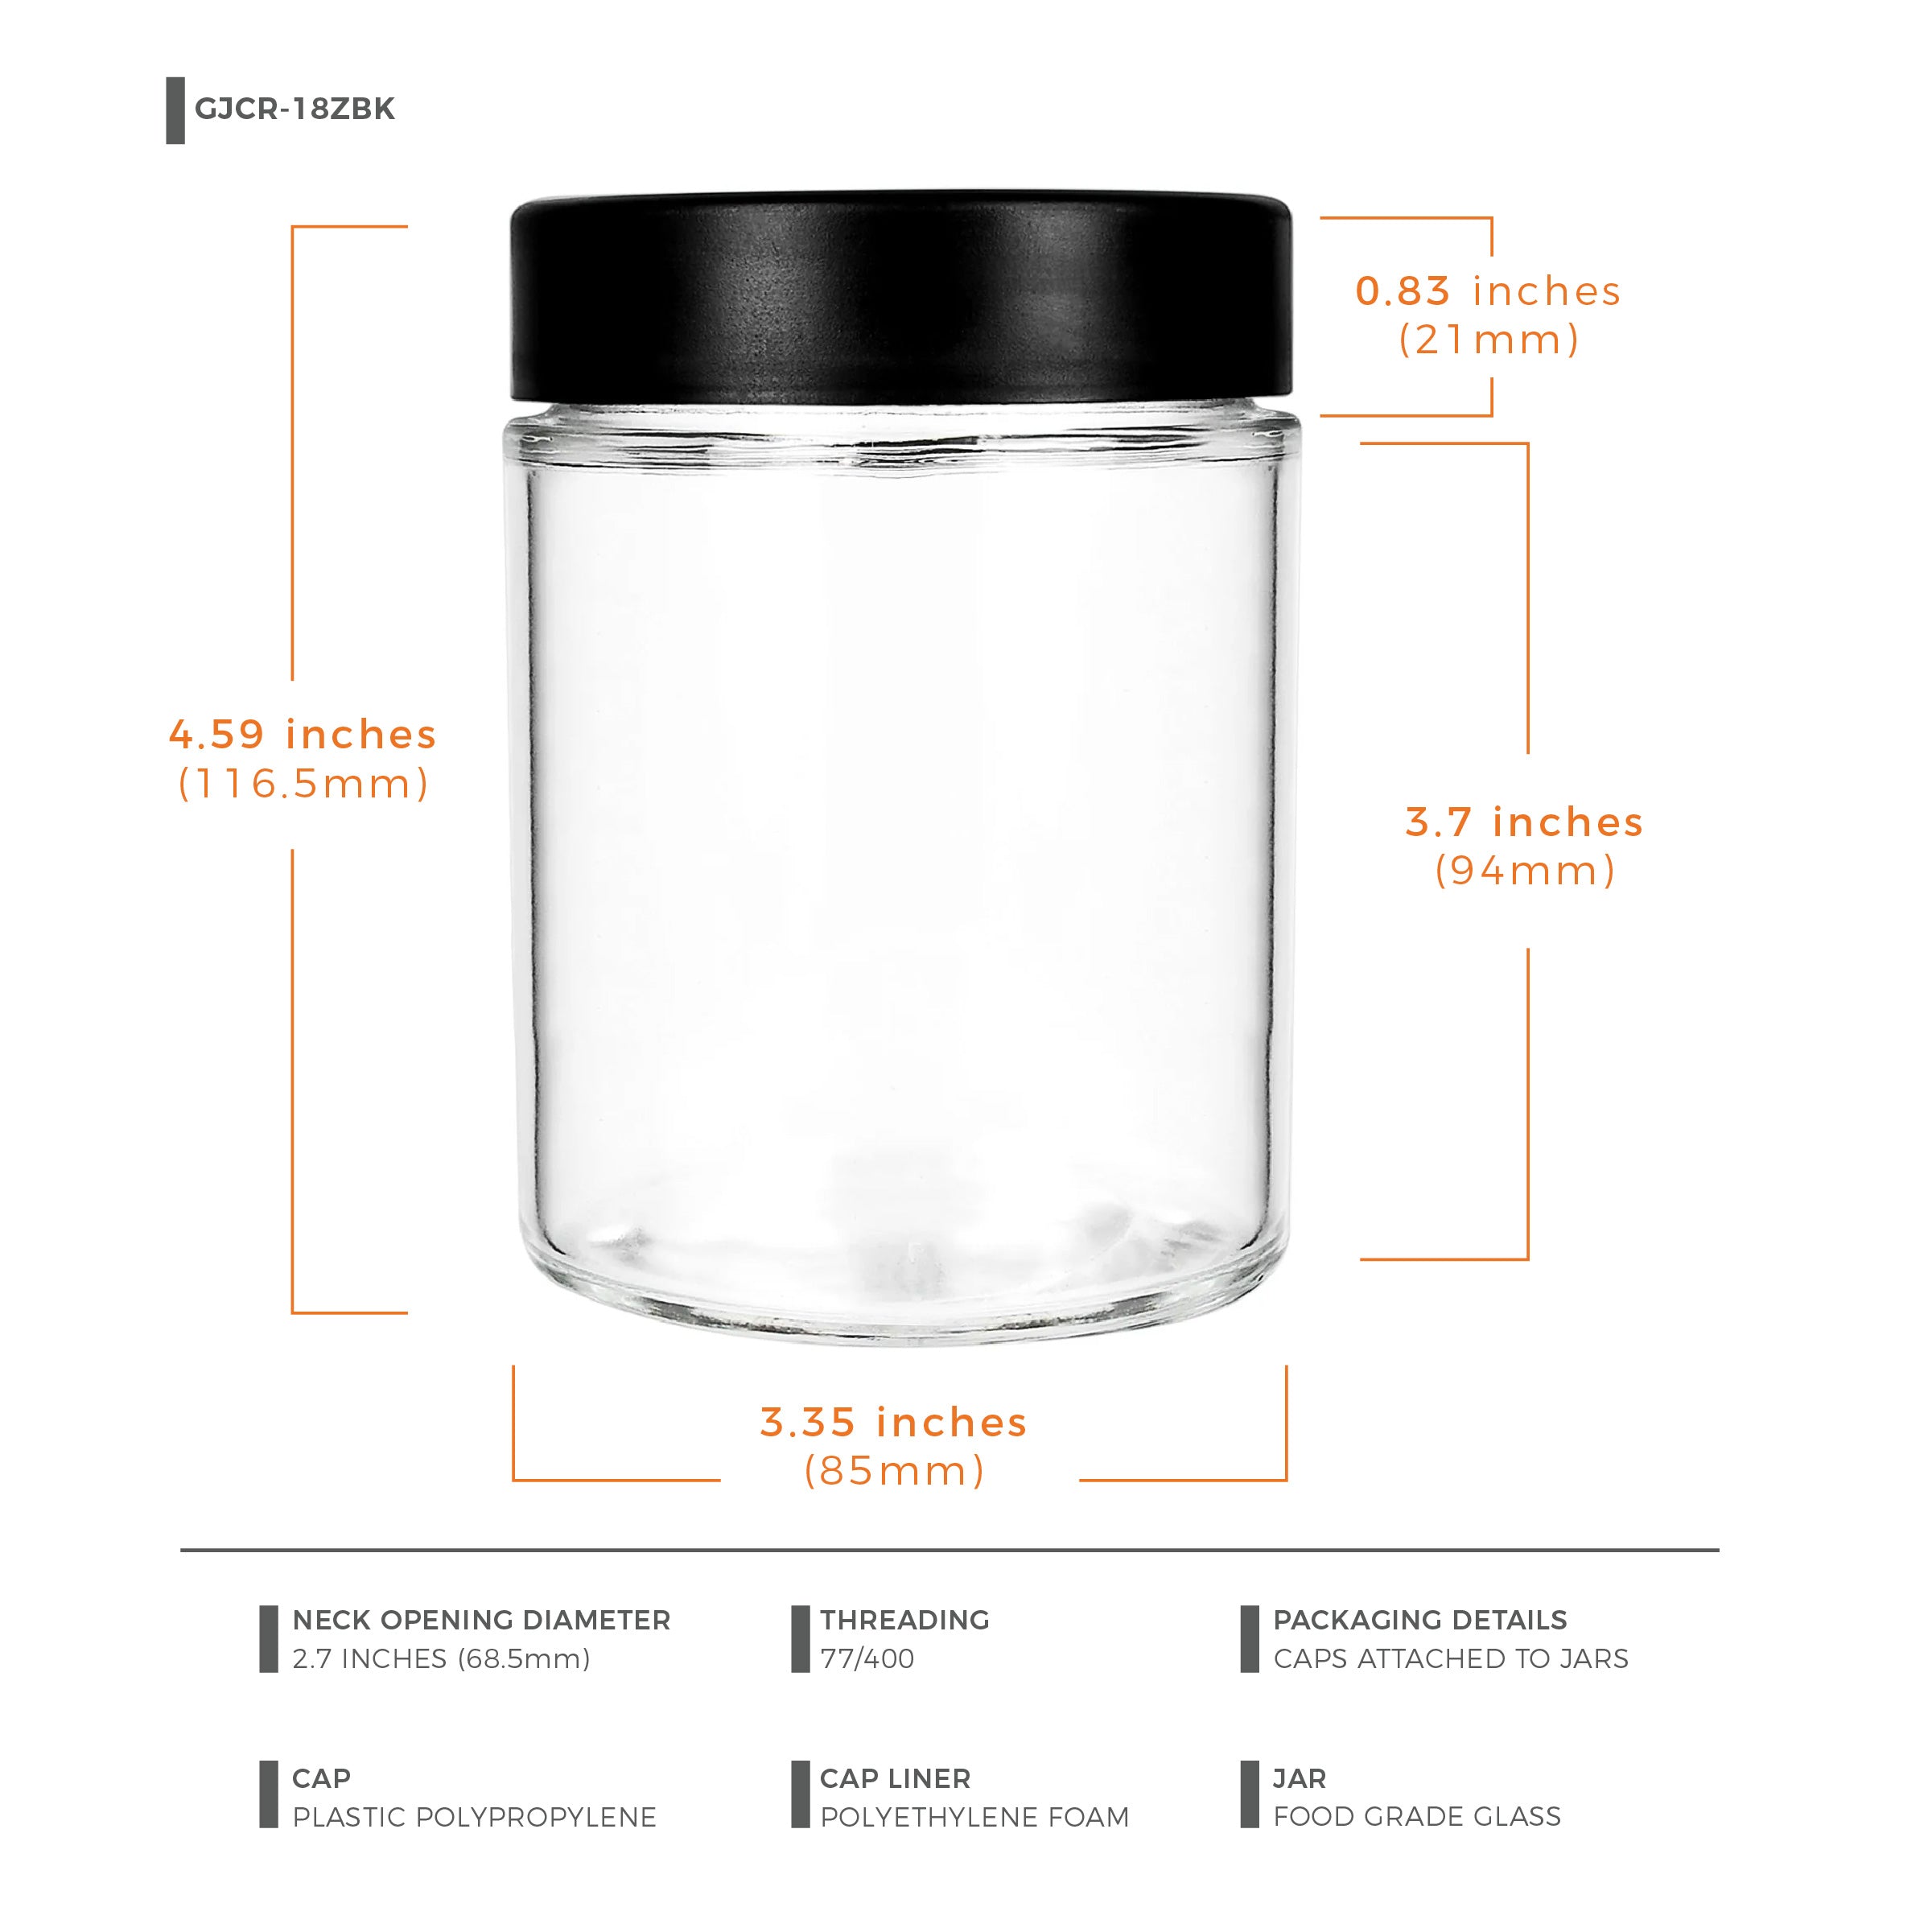 18oz Child Resistant Glass Jars With Black Cap - 28 Grams - 1 Count